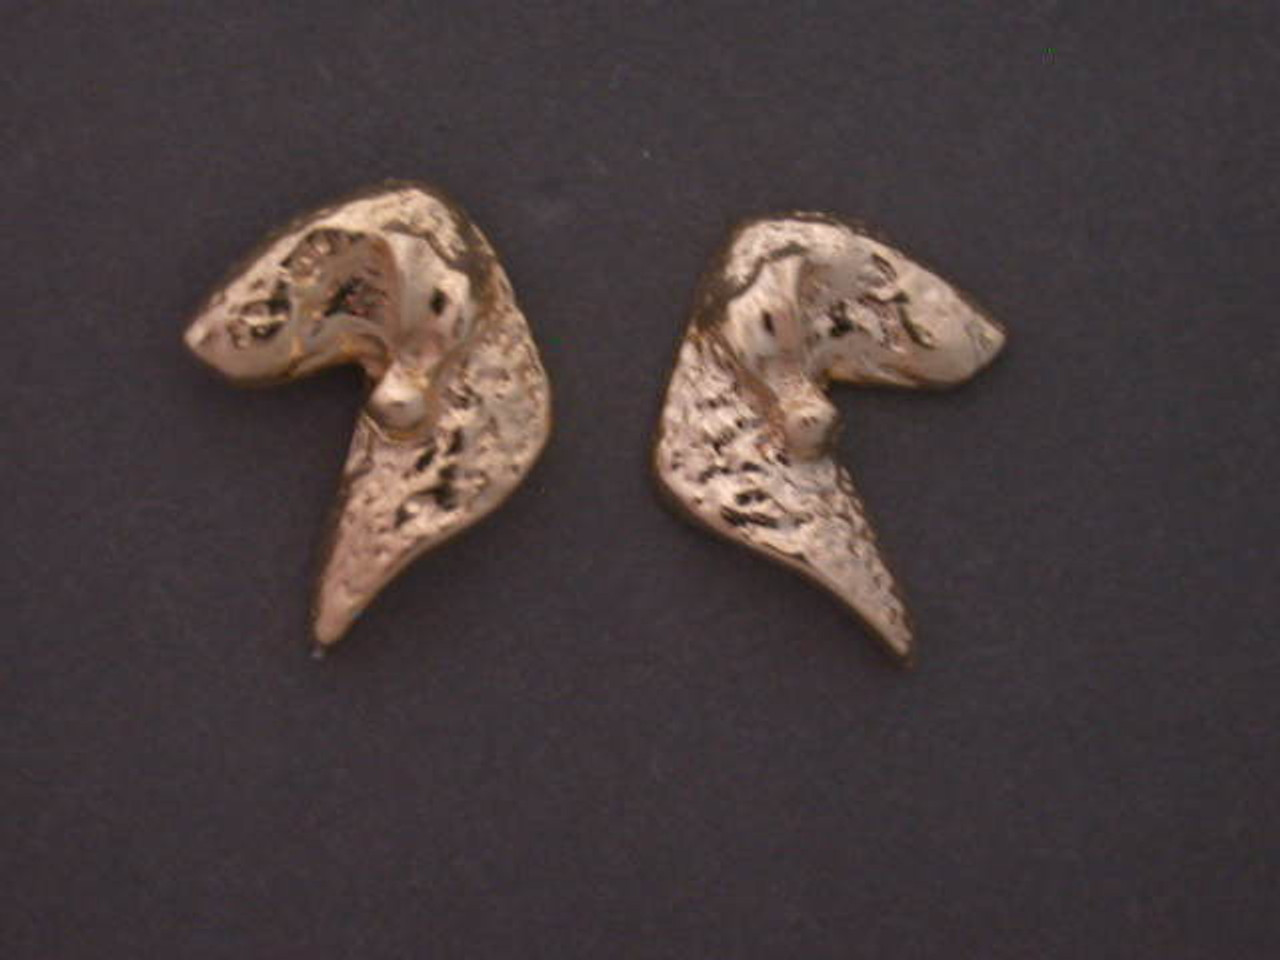 Bedlington Terrier earrings